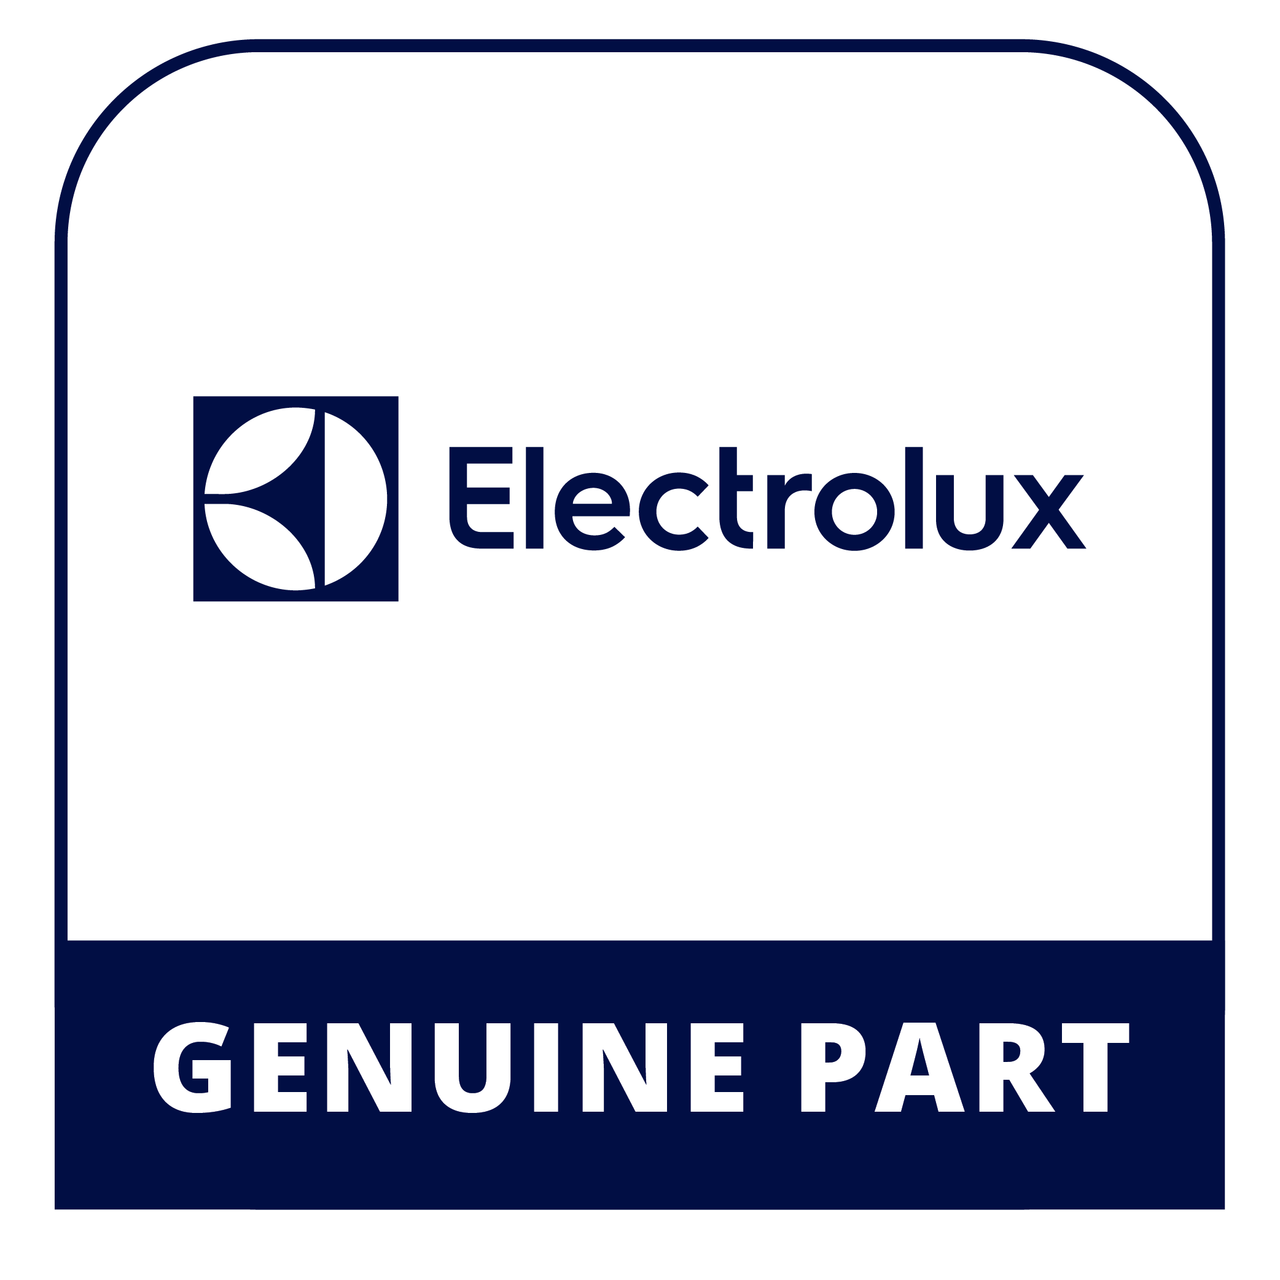 Frigidaire - Electrolux 387812004 Light Assembly - Genuine Electrolux Part